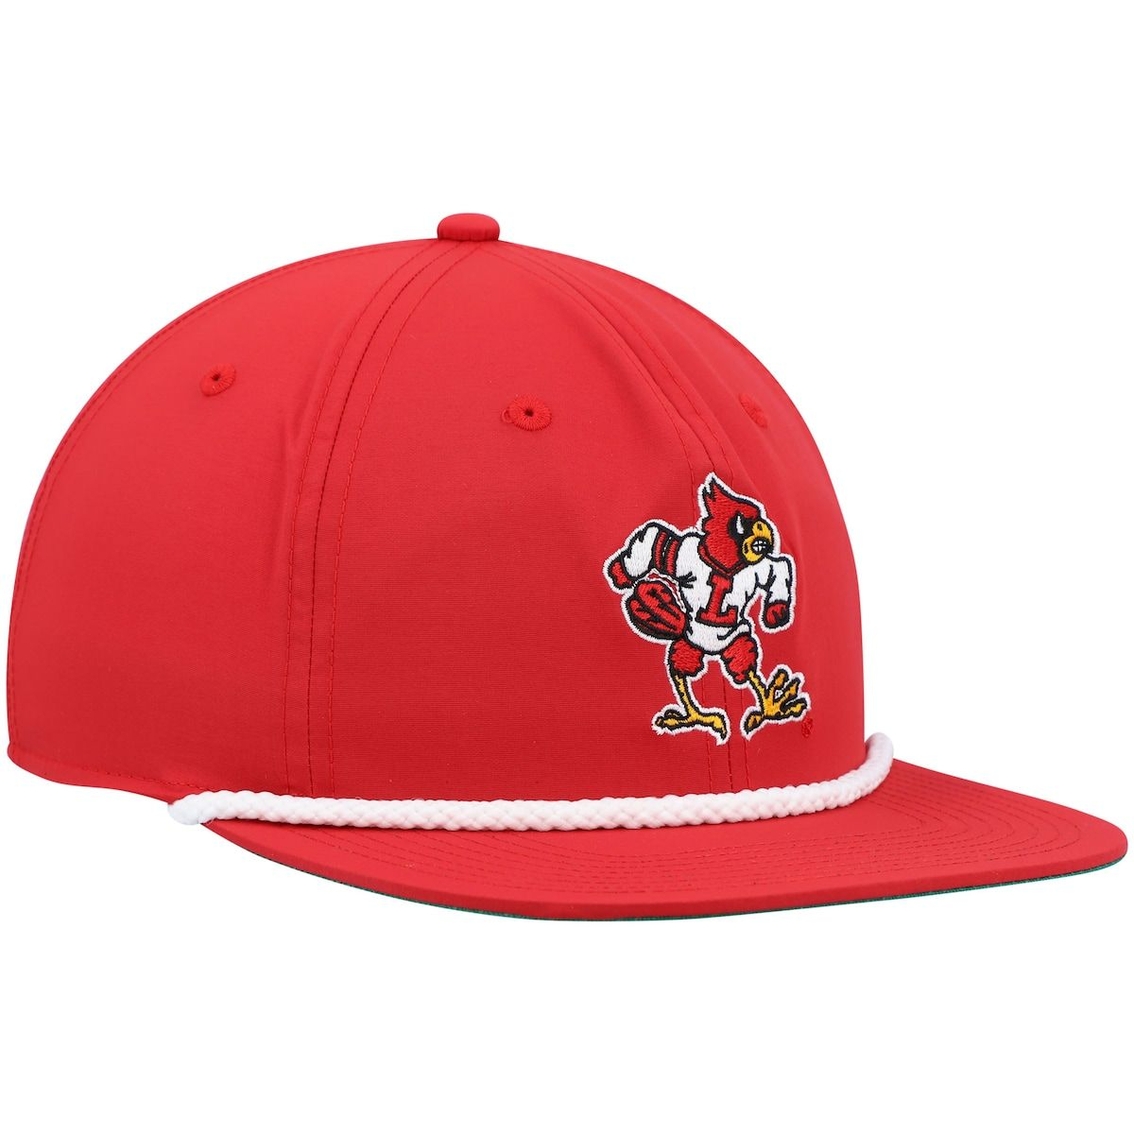 Source Unknown, Accessories, Euc Mens University Of Louisville Cardinals Cap  Hat Red Black Adjustable